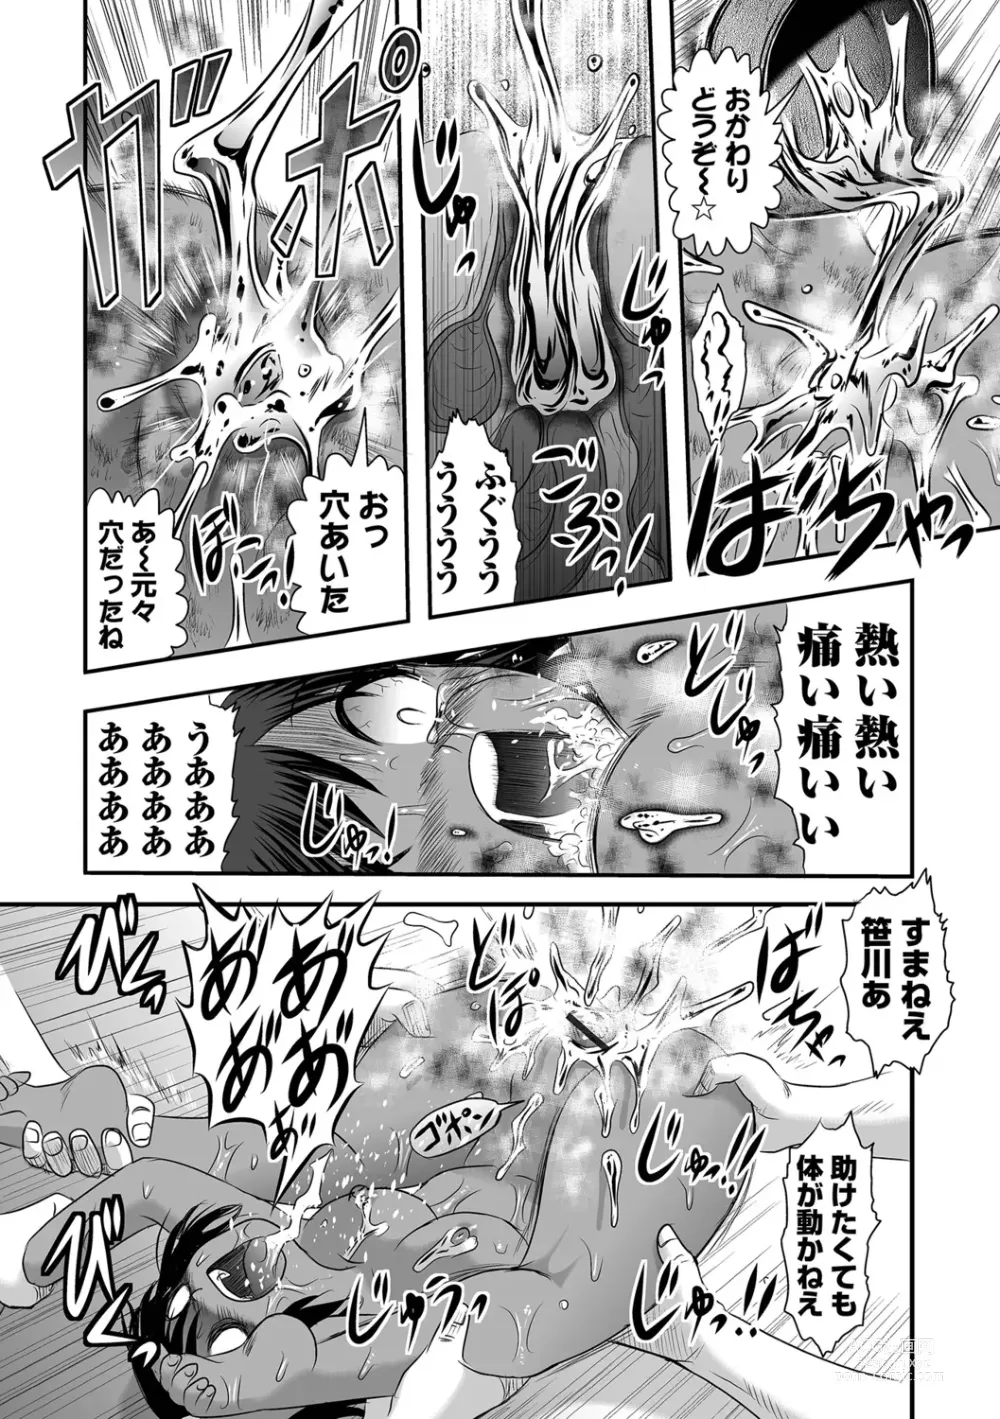 Page 14 of manga Ryona King Vol.19